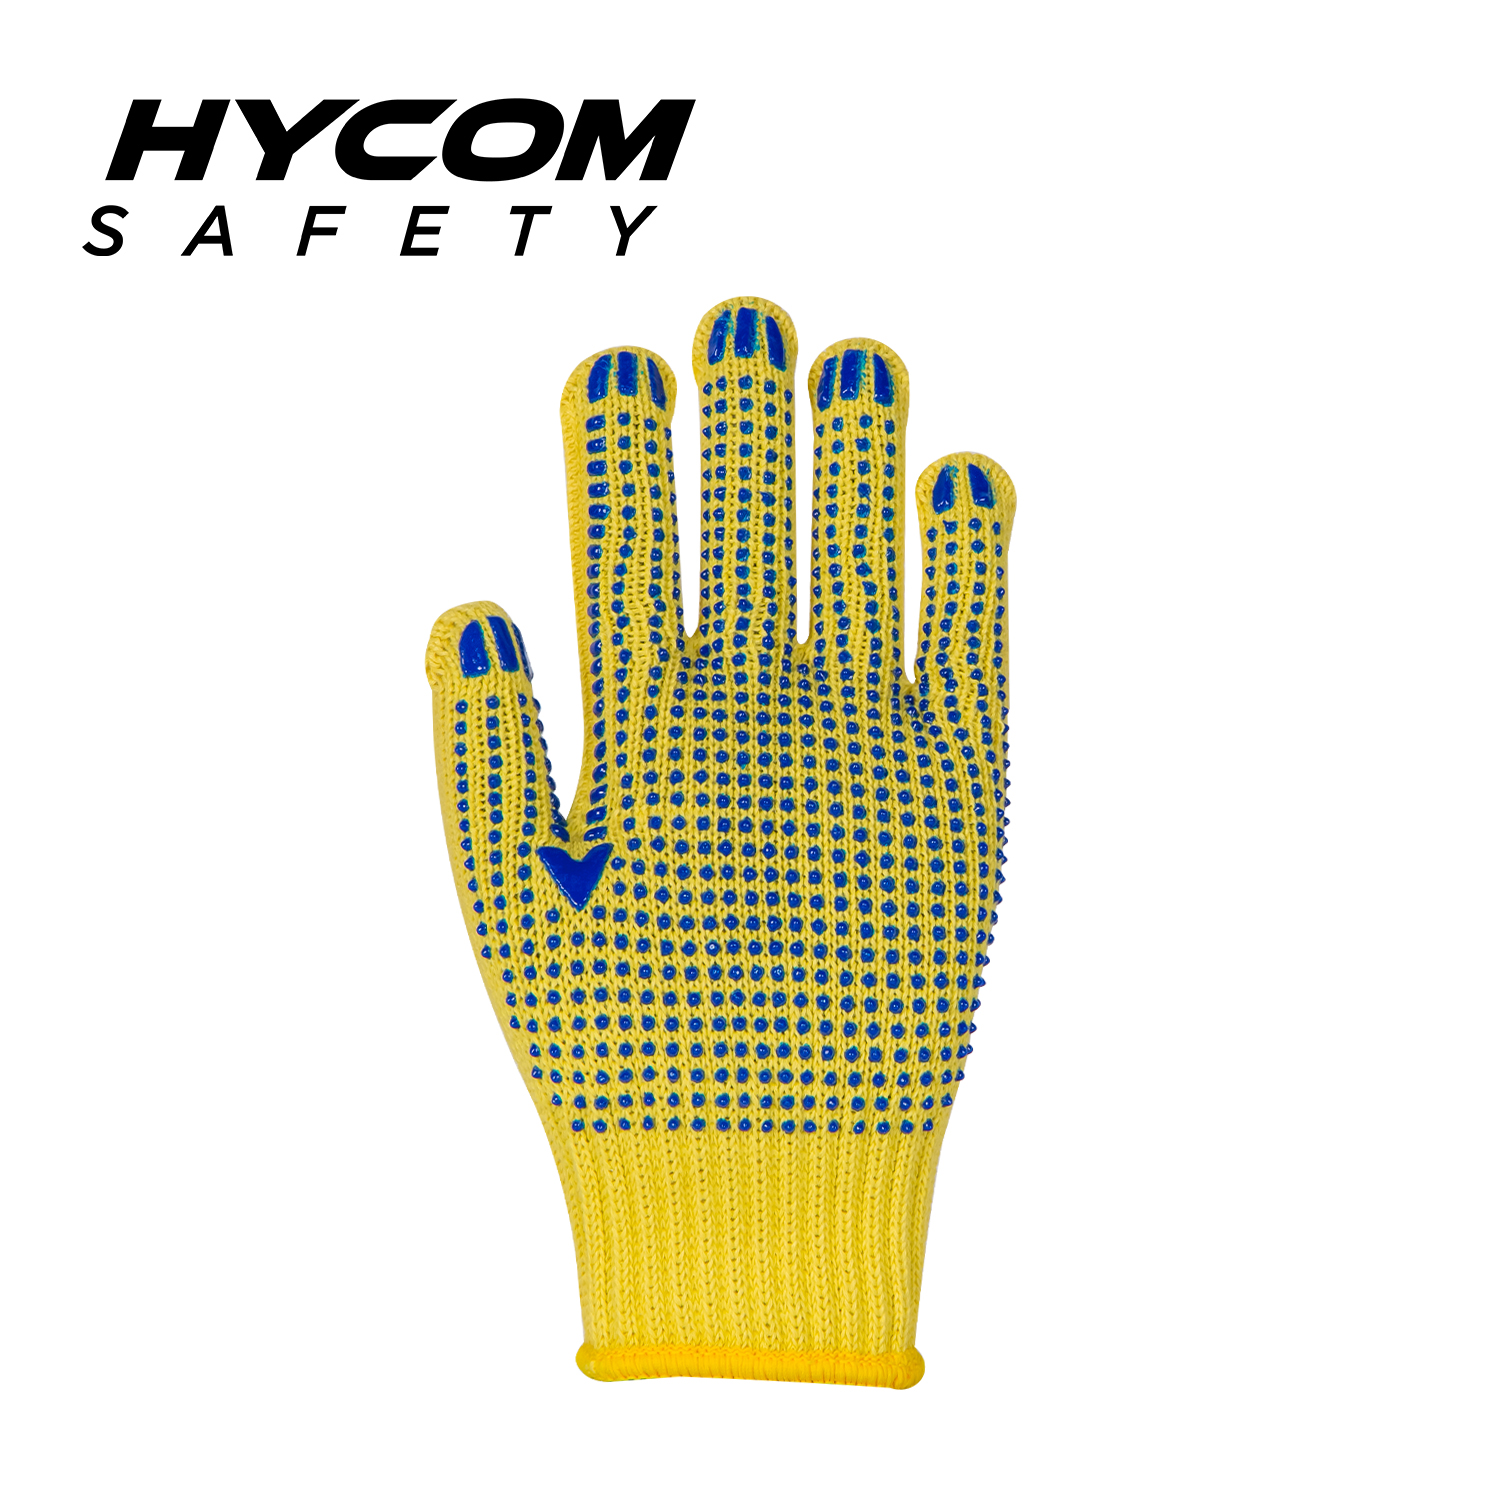 HYCOM 7G ANSI 2 Guante ignífugo de aramida con puntos de PVC en la palma Guantes PPE